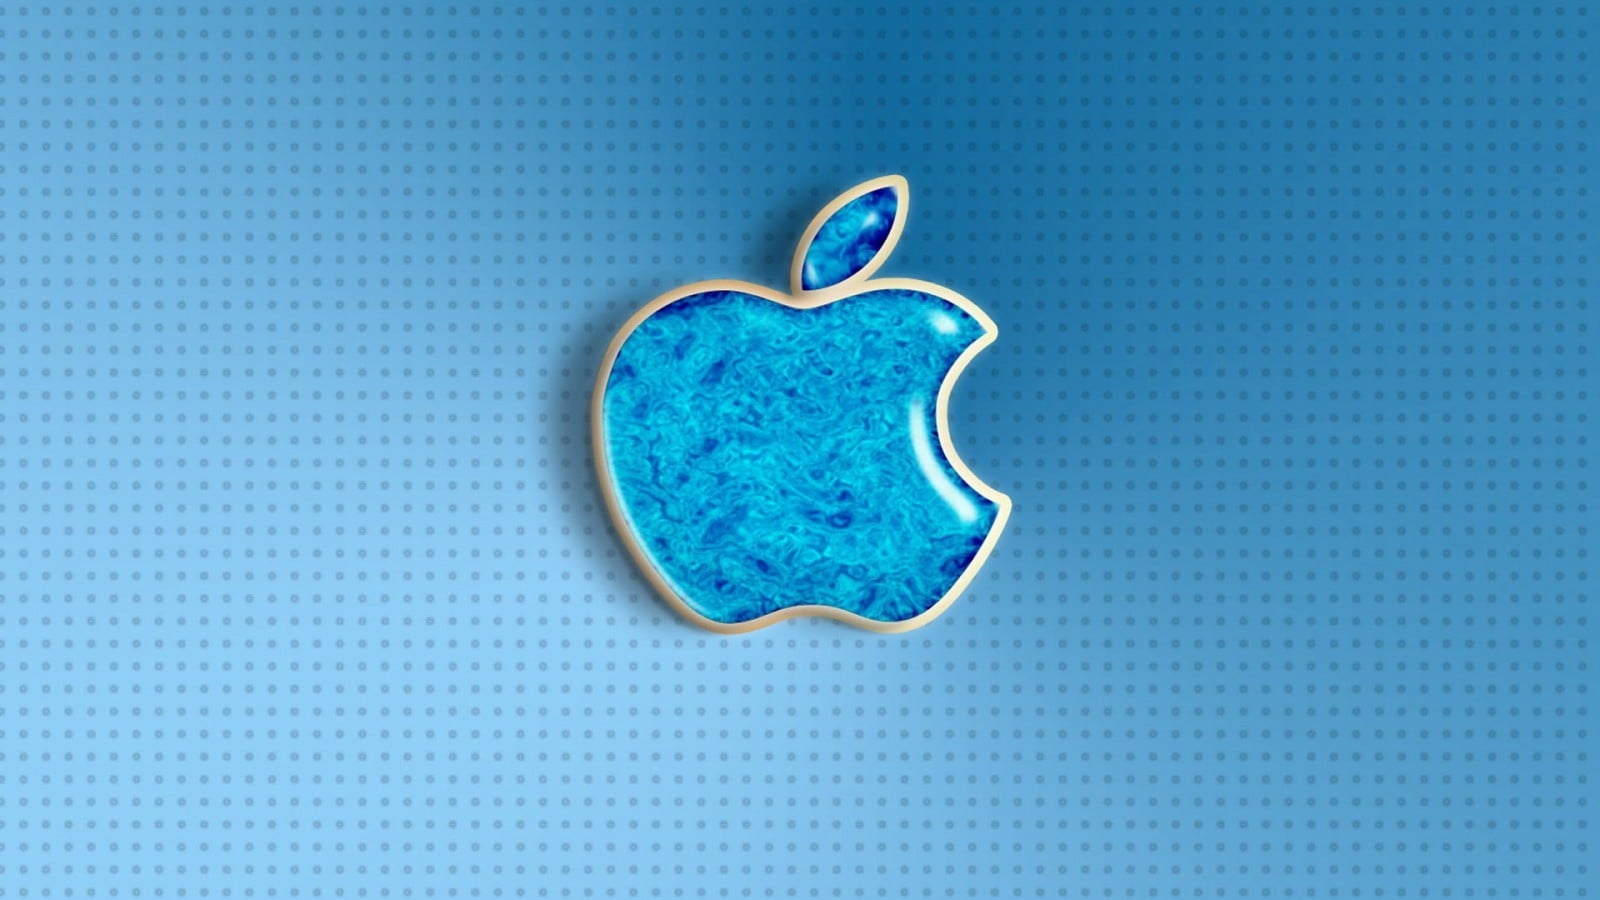 blue Apple logo, Apple Inc., logo, simple background, pattern